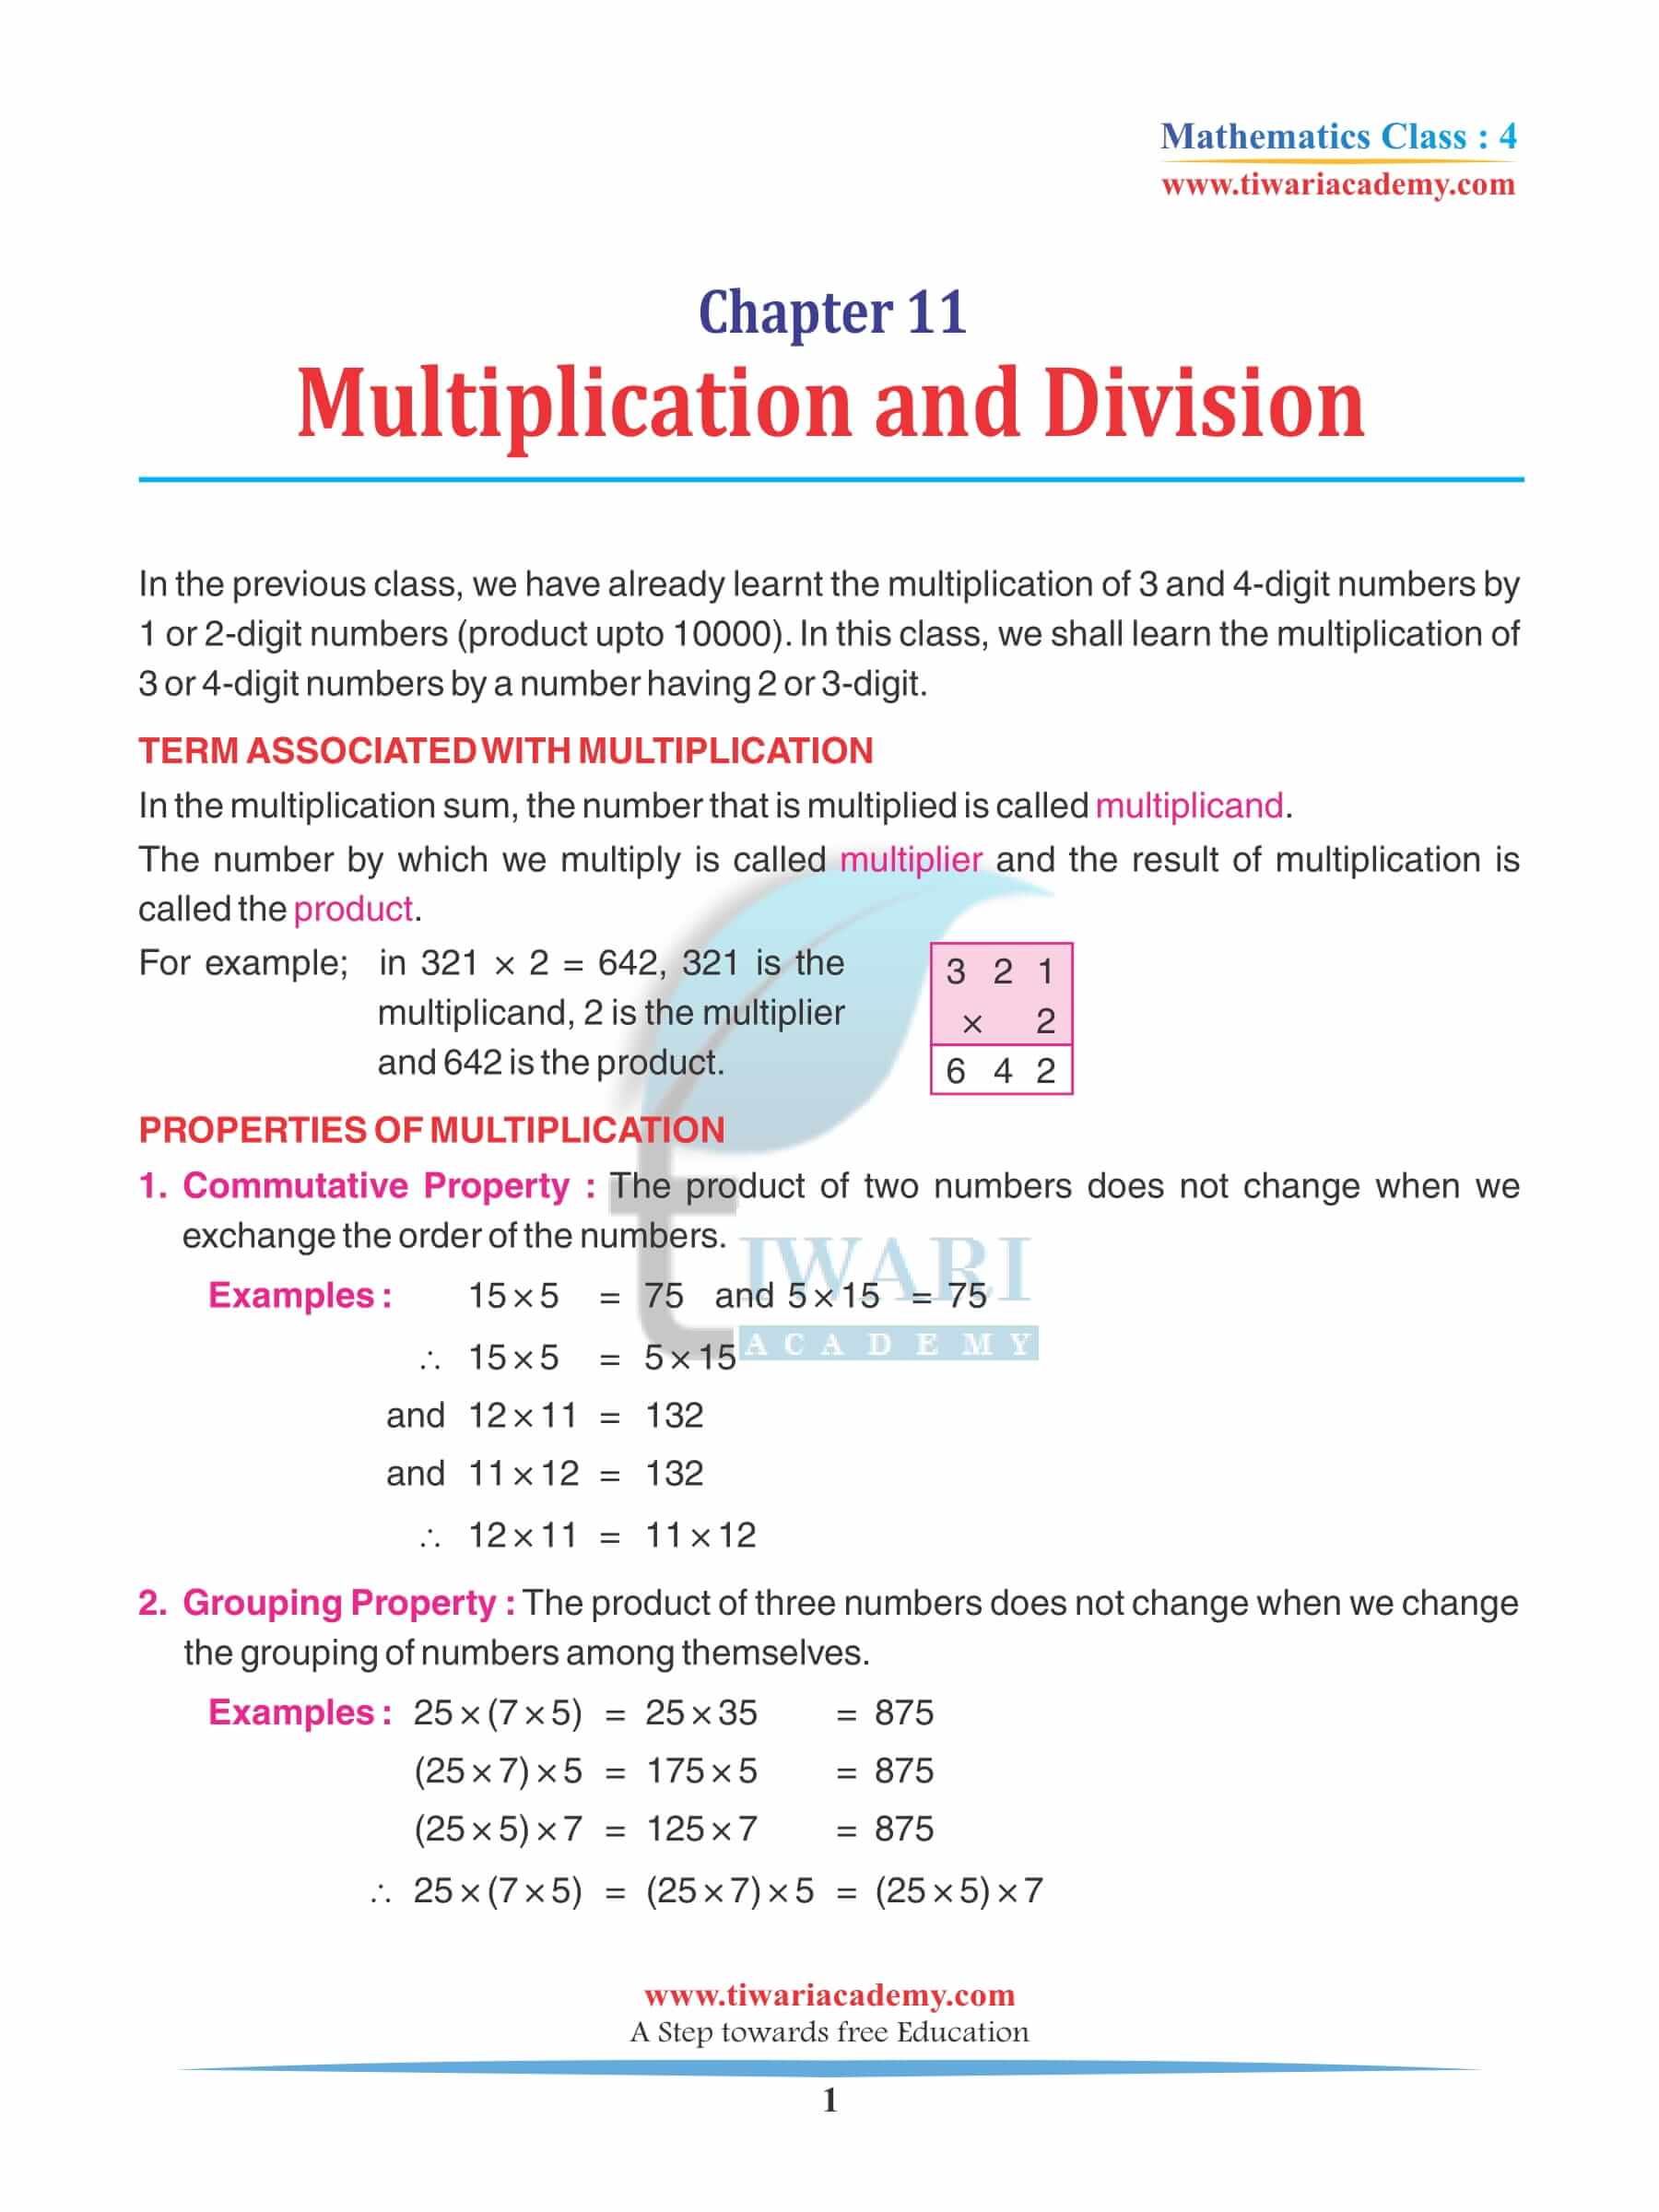 Class 4 Maths Chapter 11 Revision Book